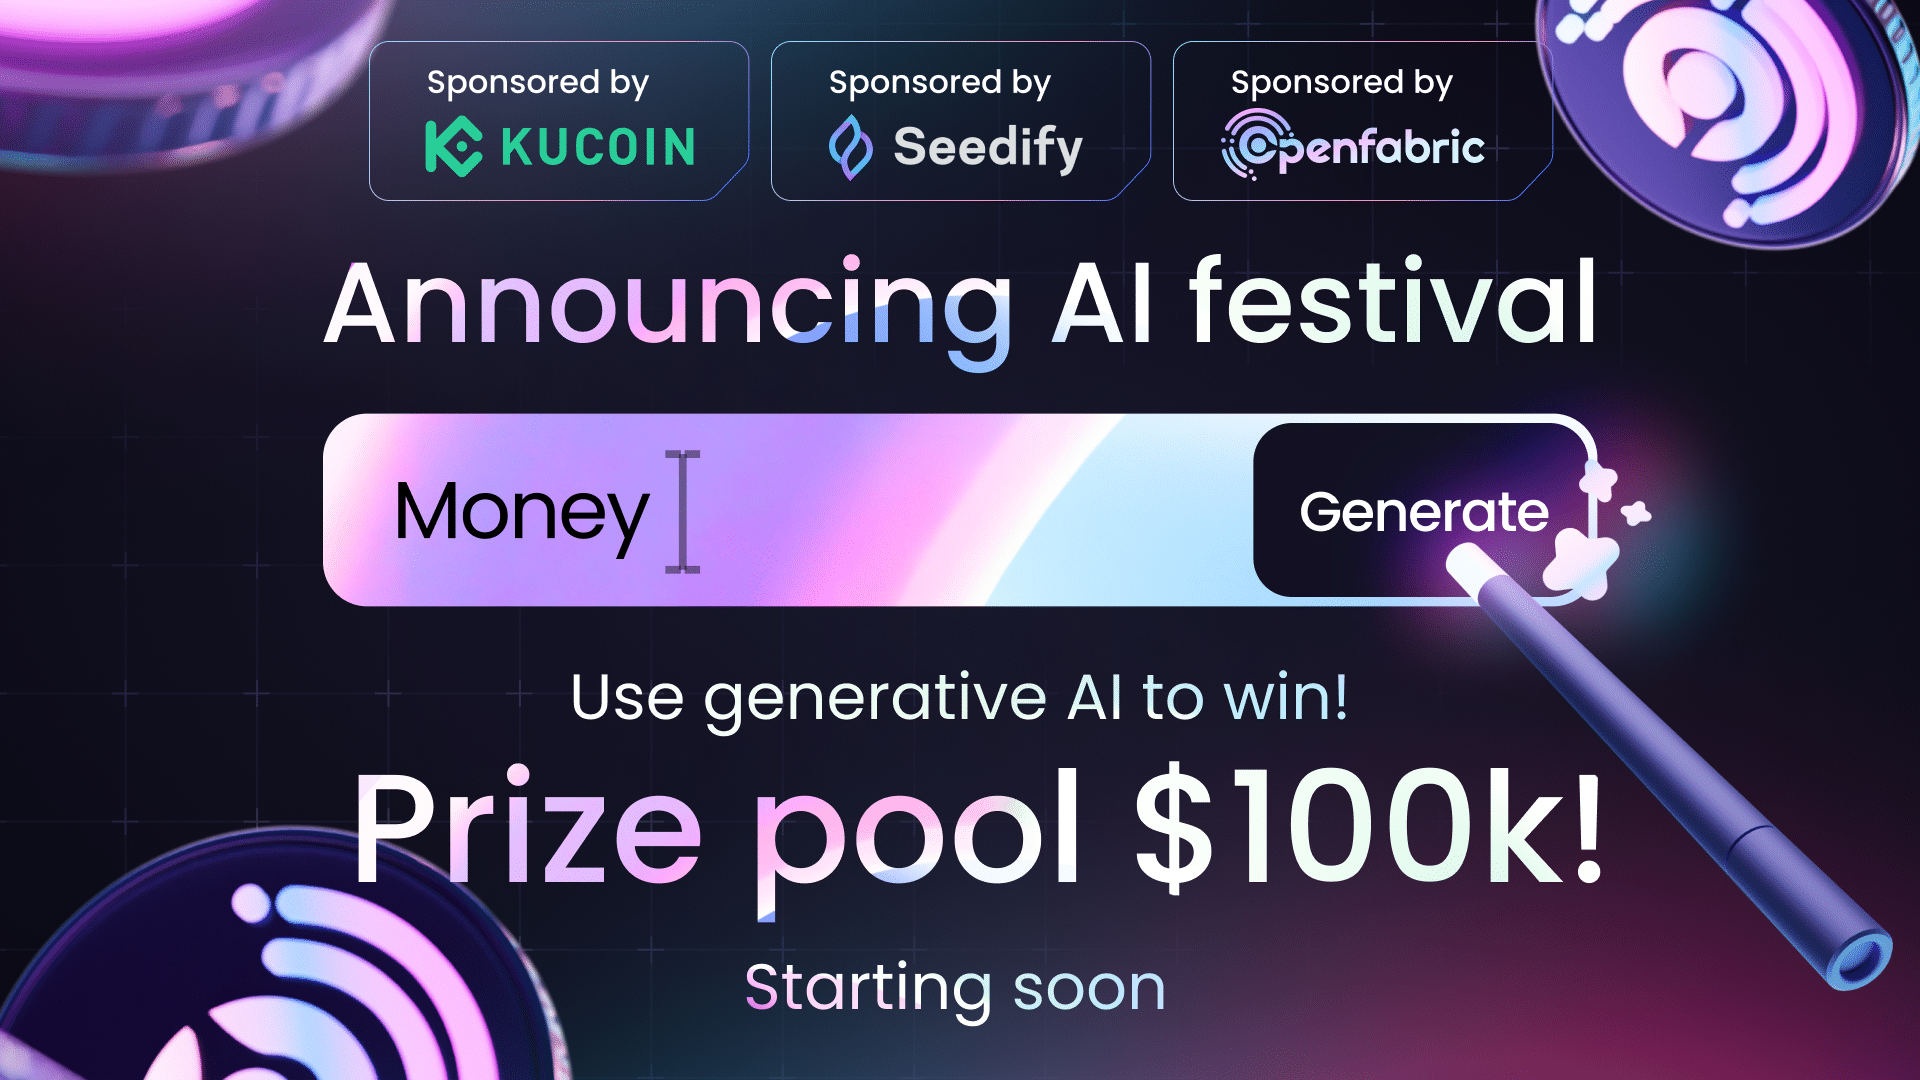 Openfabric AI festival - Prize pool $100k